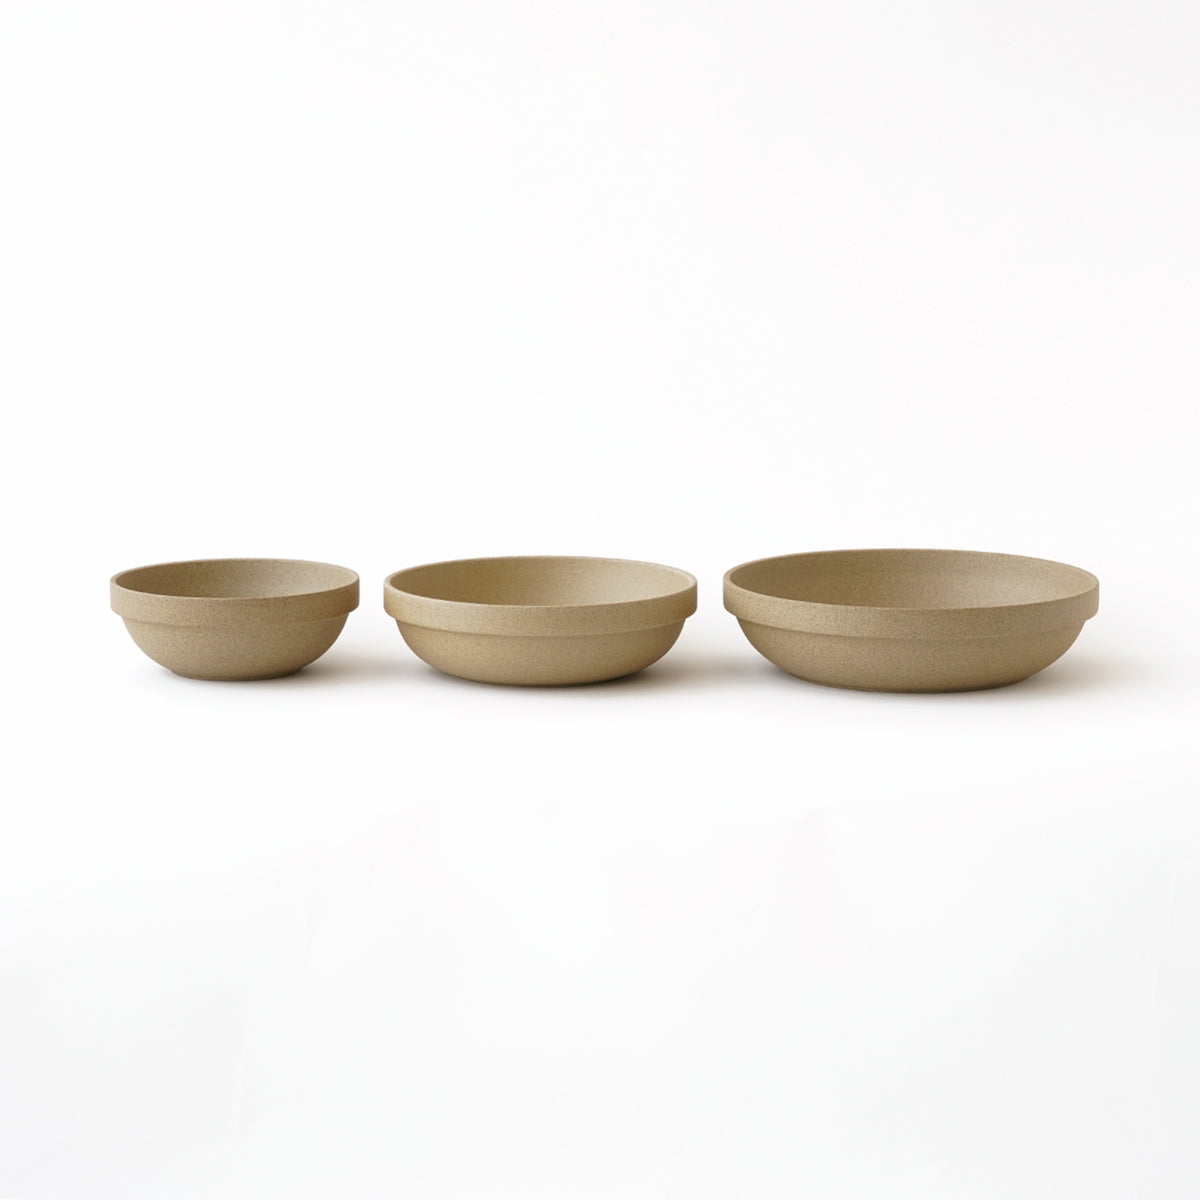 Hasami Porcelain Round Bowl 7 3/8" Natural